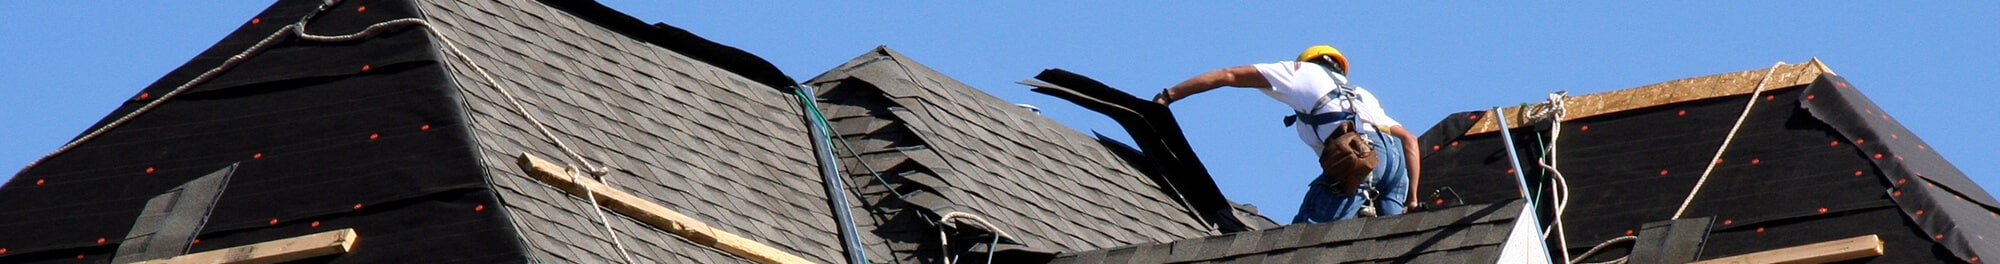 Southeast Wisconsin roof replacement - Franklin, Oak Creek, Racine, Kenosha